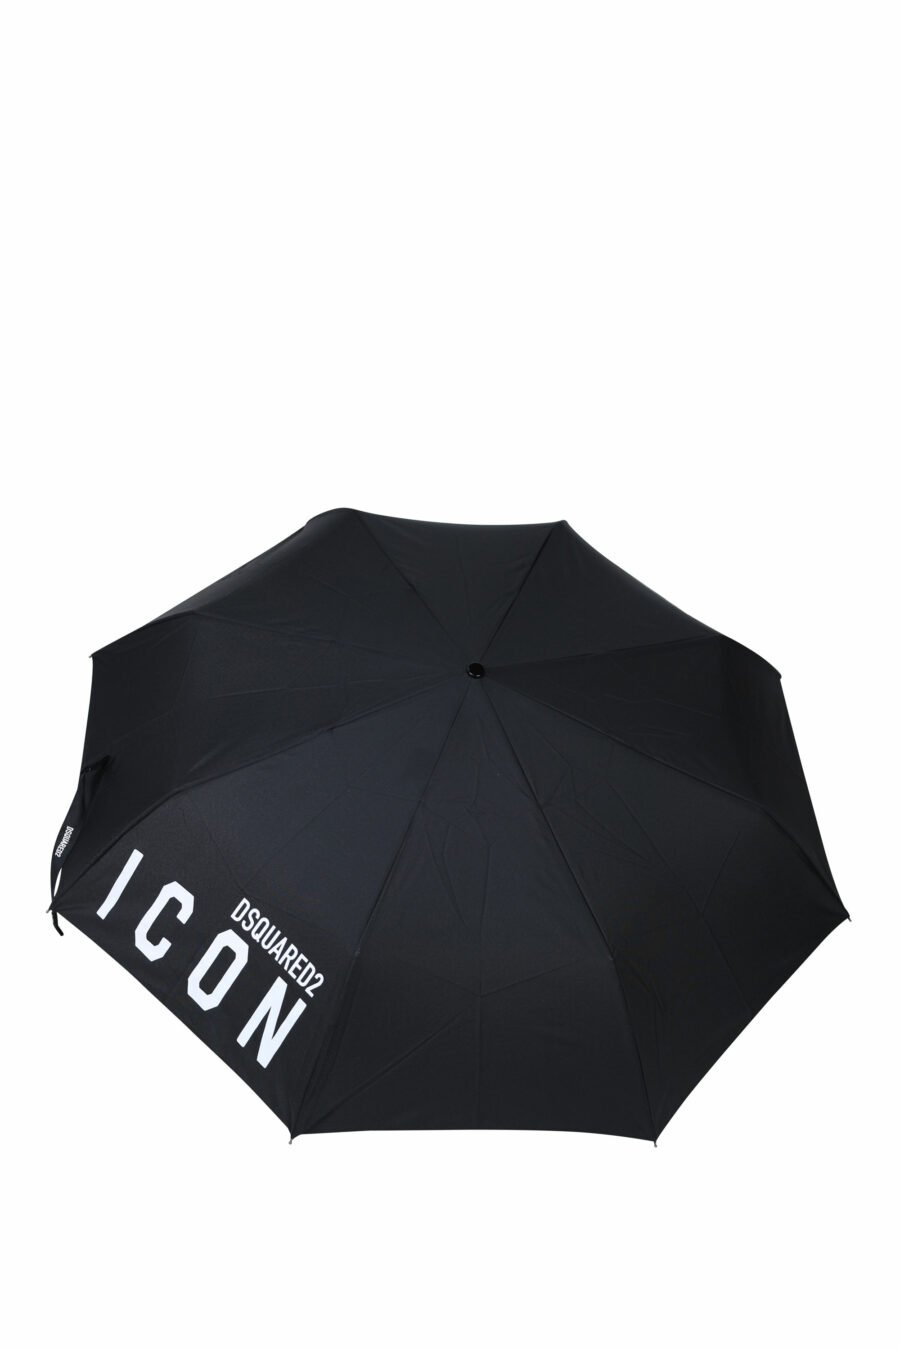 Black umbrella with "icon" logo - 8055777215265